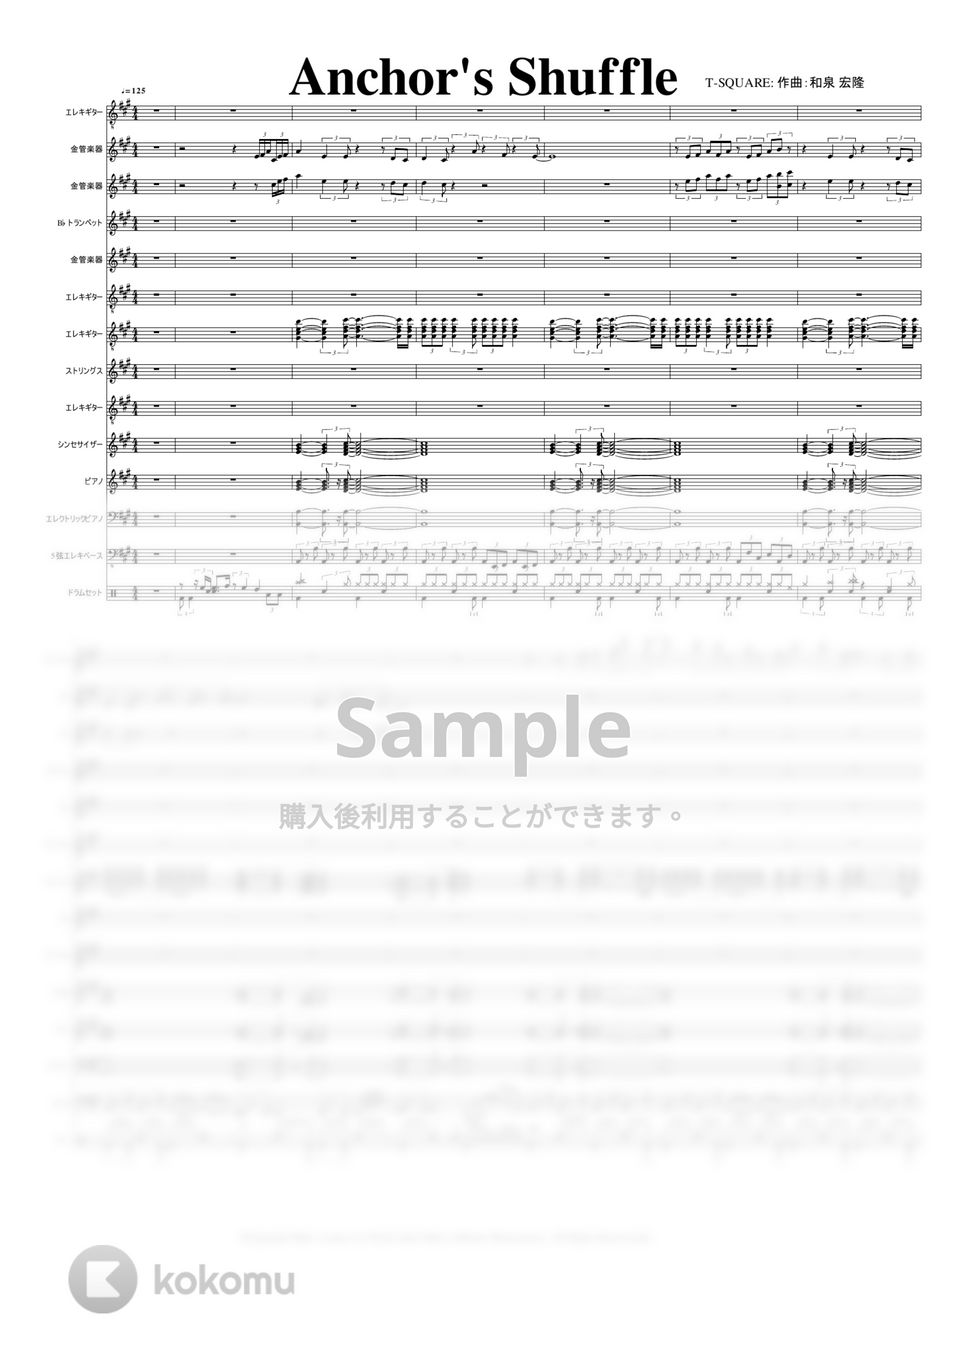 T-SQUARE - ANCHOR'S SHUFFLE (作曲：和泉宏隆 H. IZUMI) by @MitsuruMinamiyama